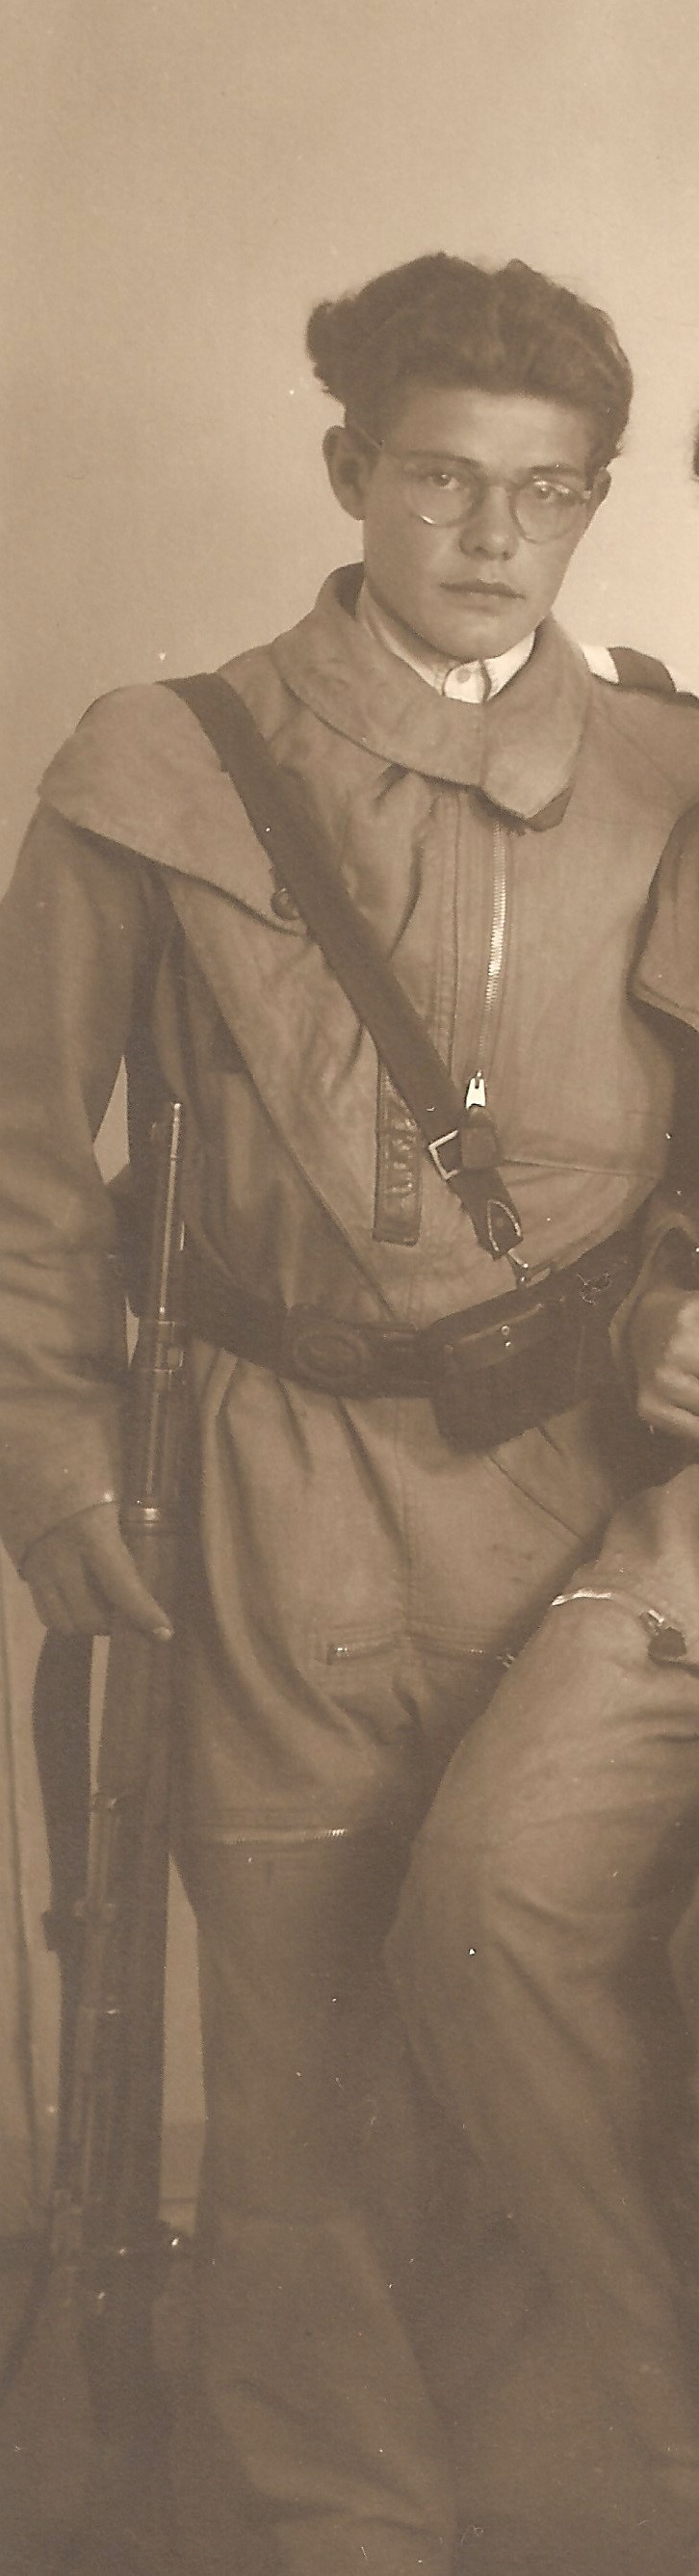 Jaroslav Hlubůček as a member of the Revolutionary Guards in 1945 